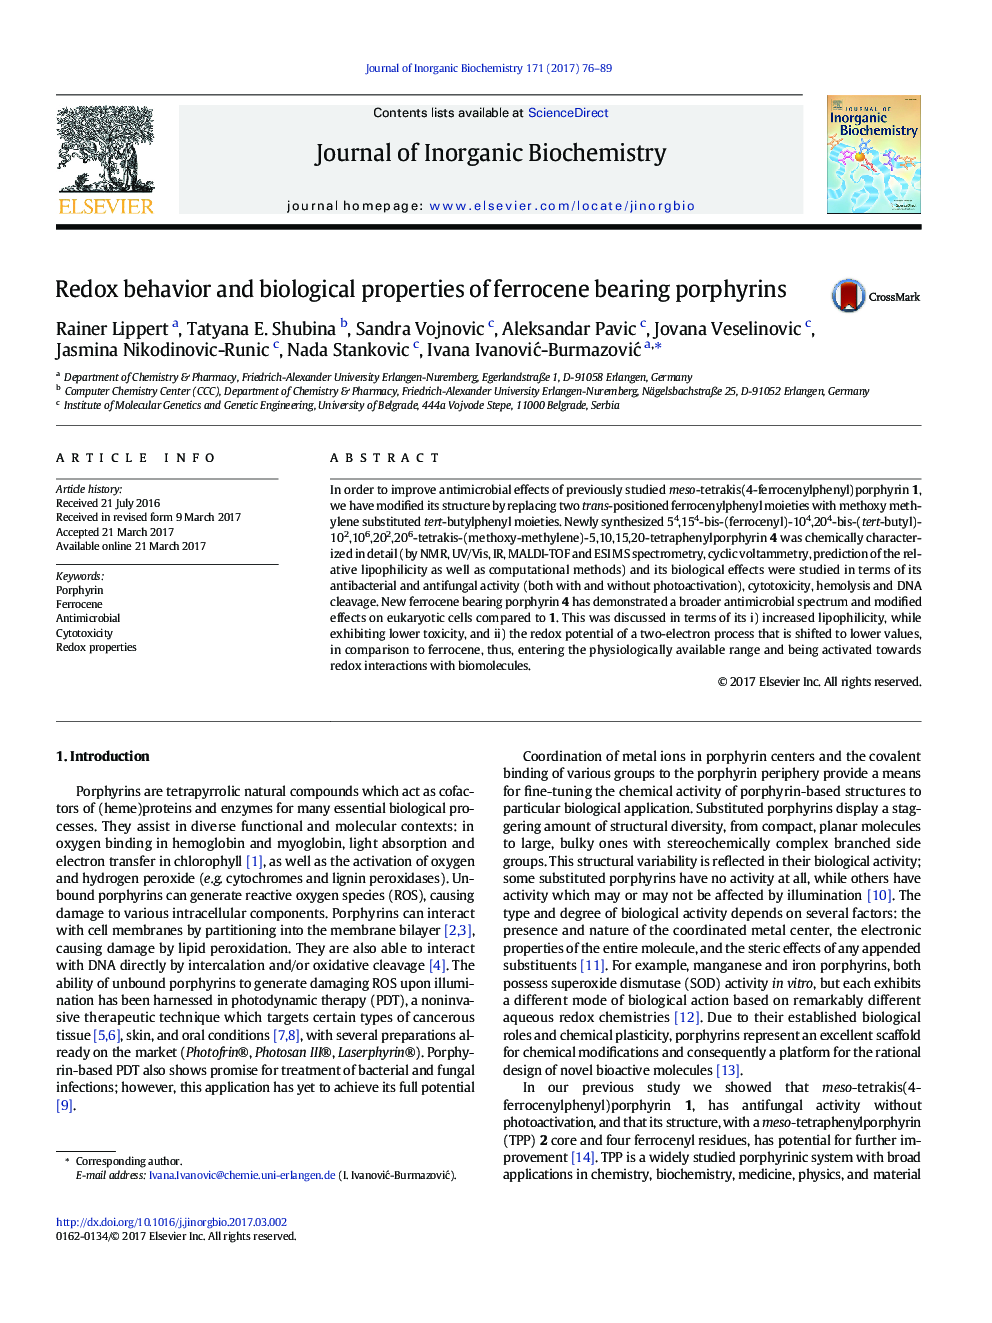 Redox behavior and biological properties of ferrocene bearing porphyrins